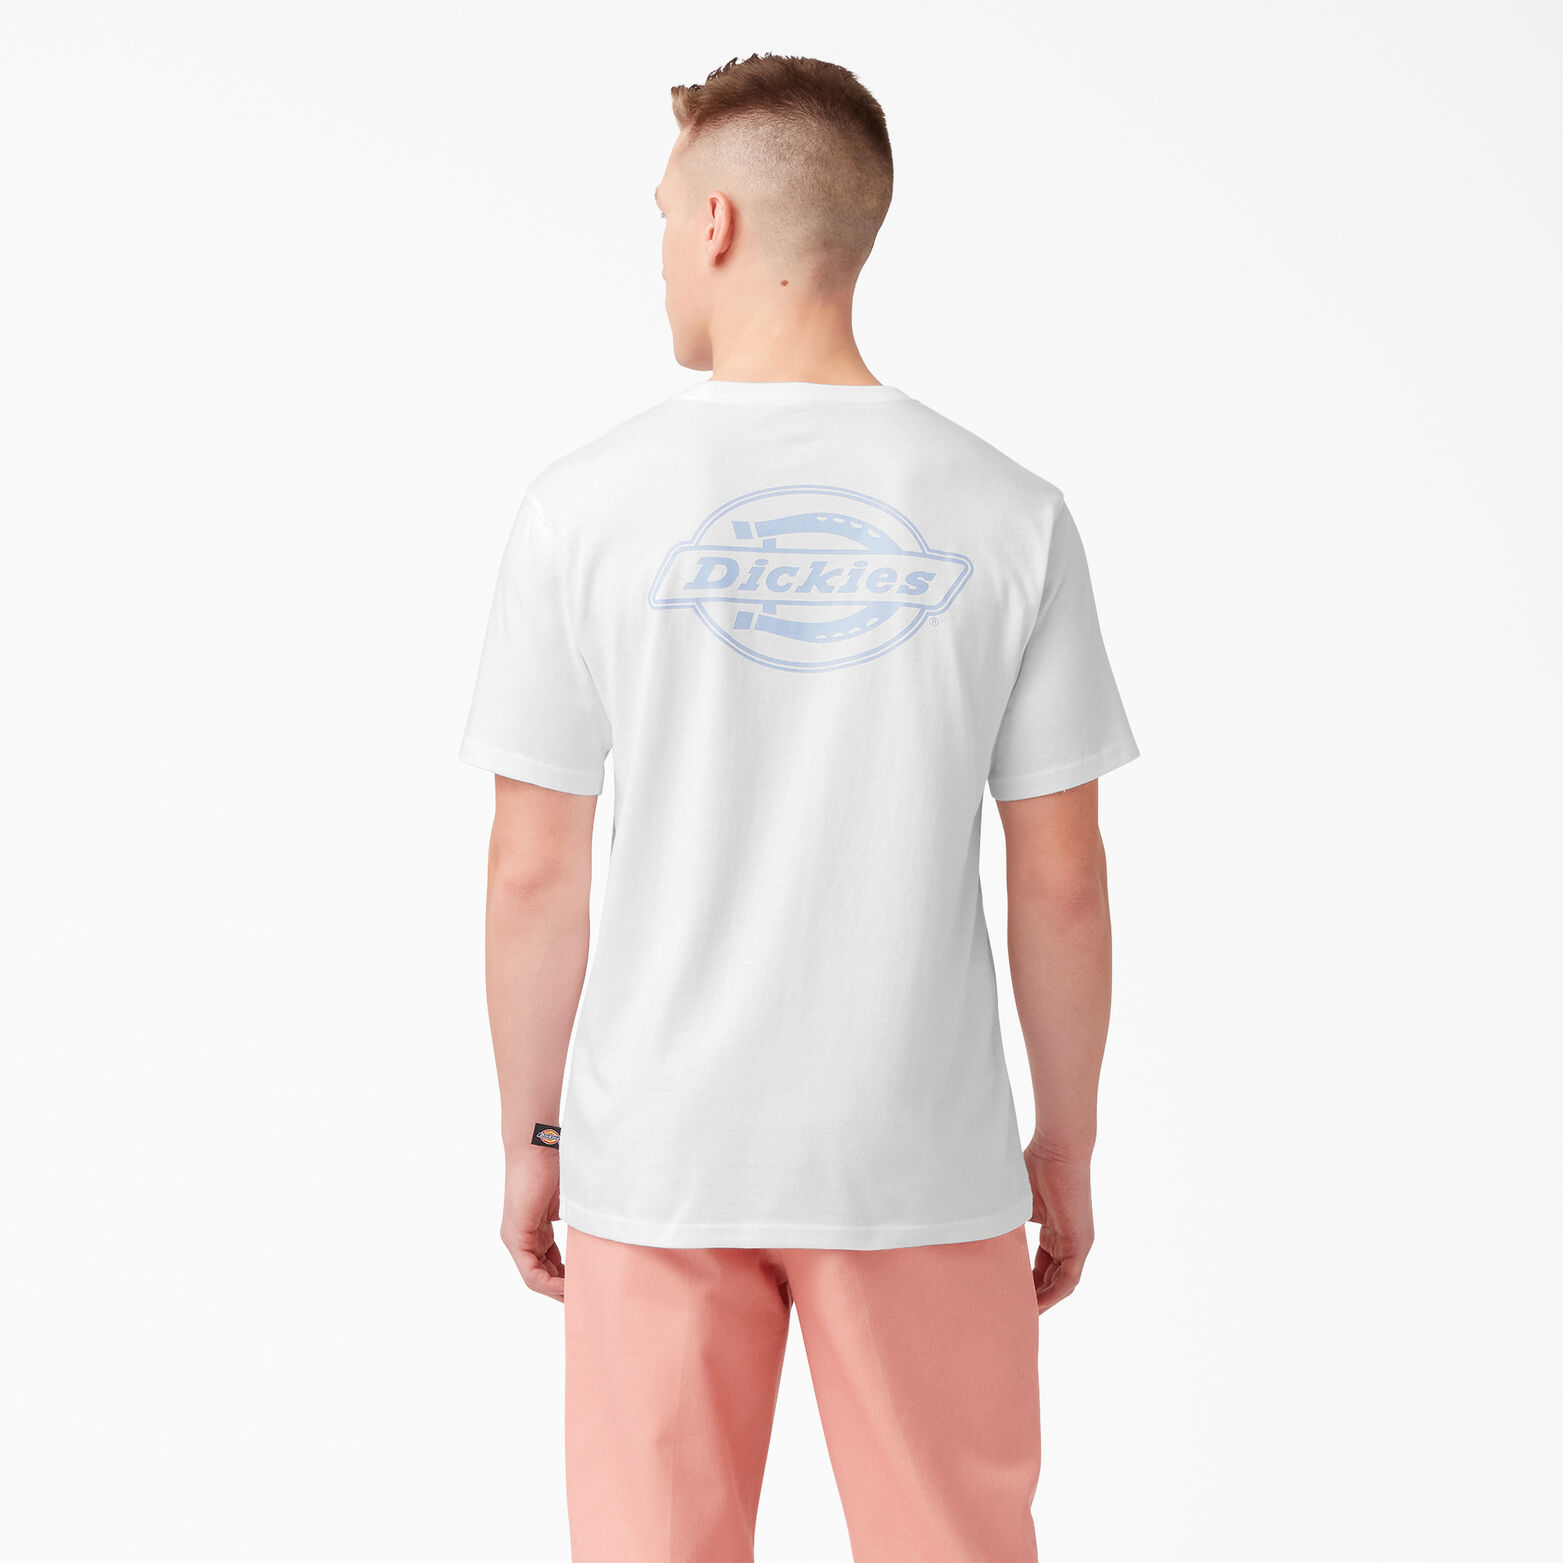 Hurley Mens Premium Short Sleeve Graphic Tshirt 